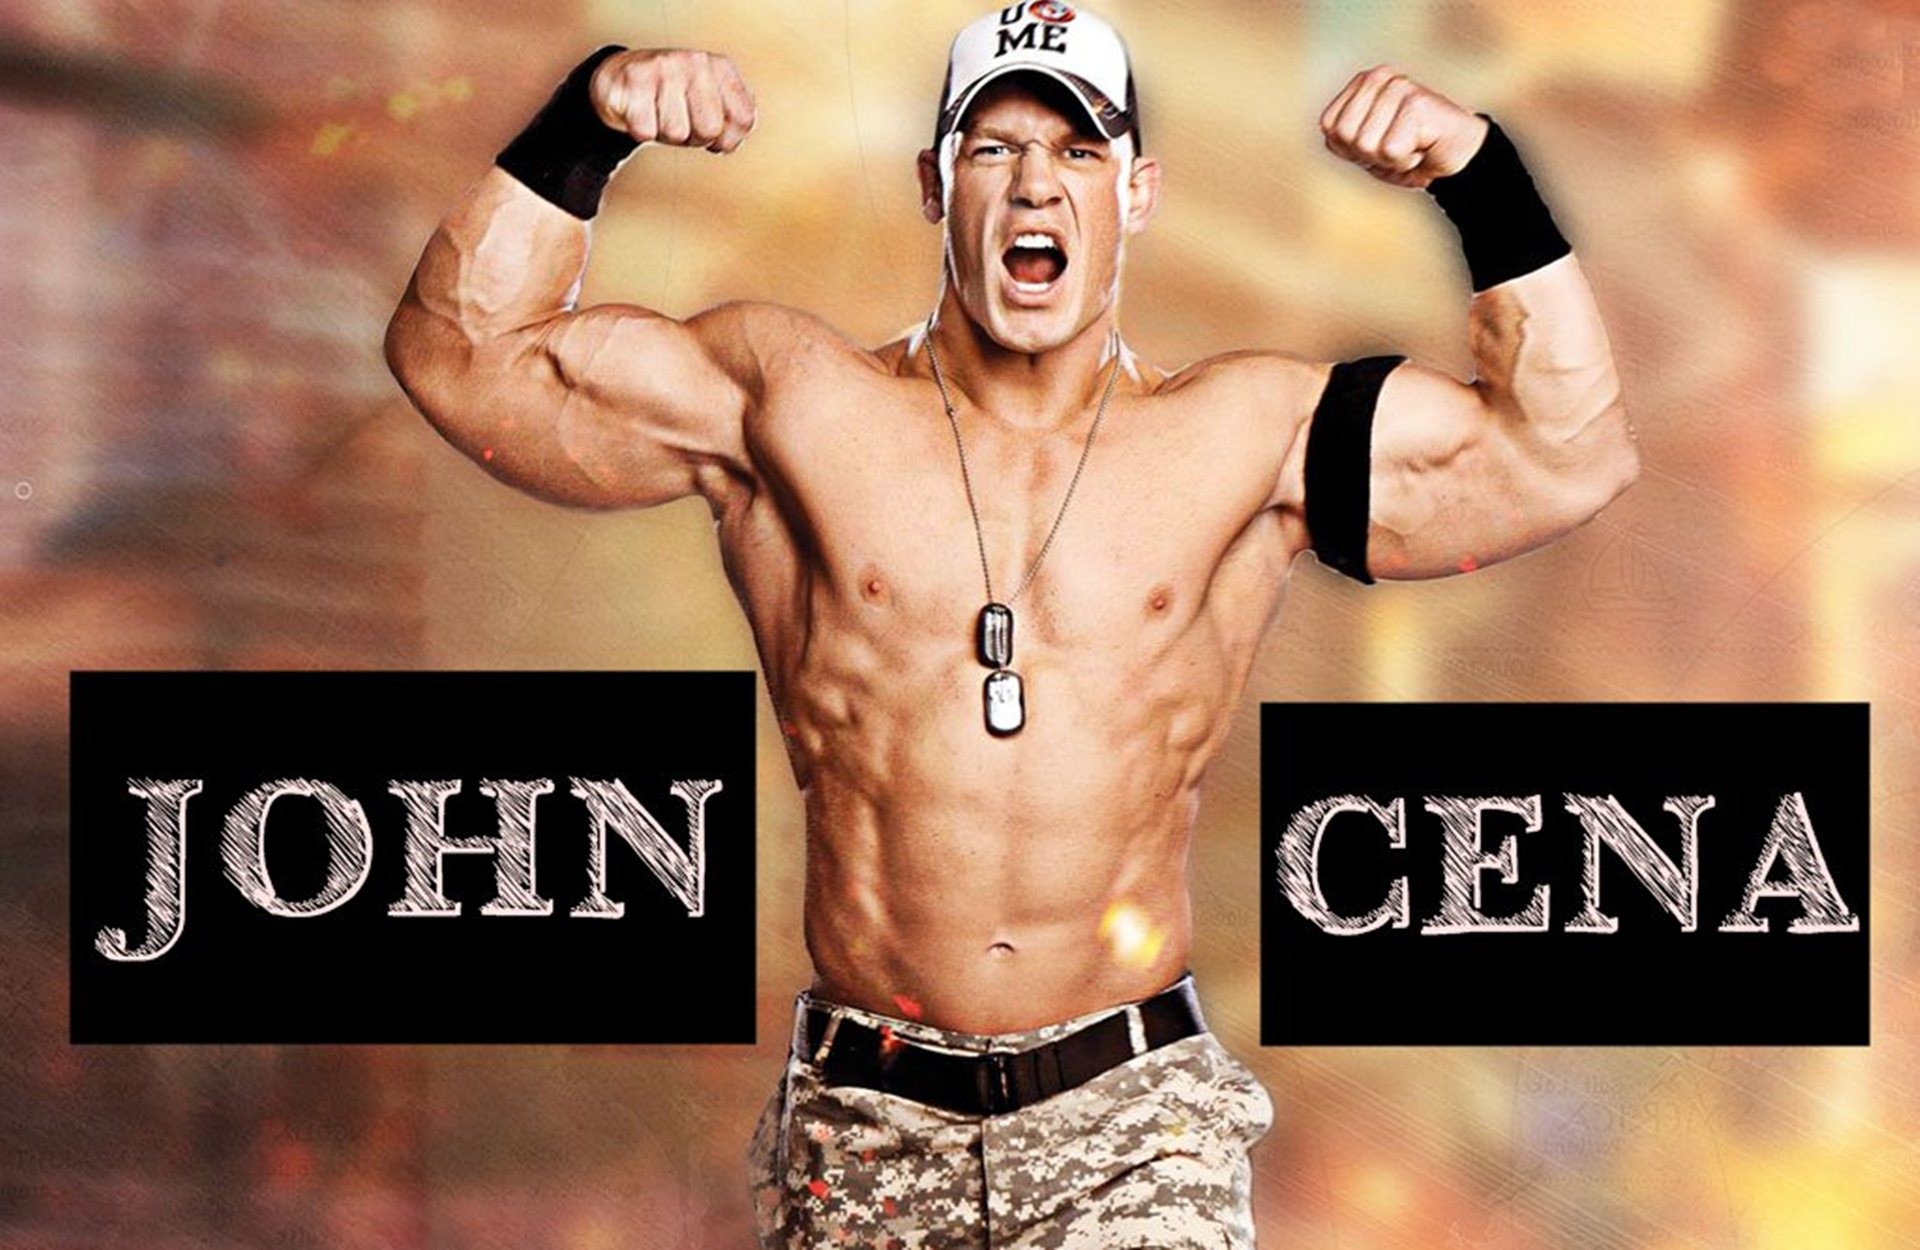 John Cena New HD Wallpapers (68+ images)